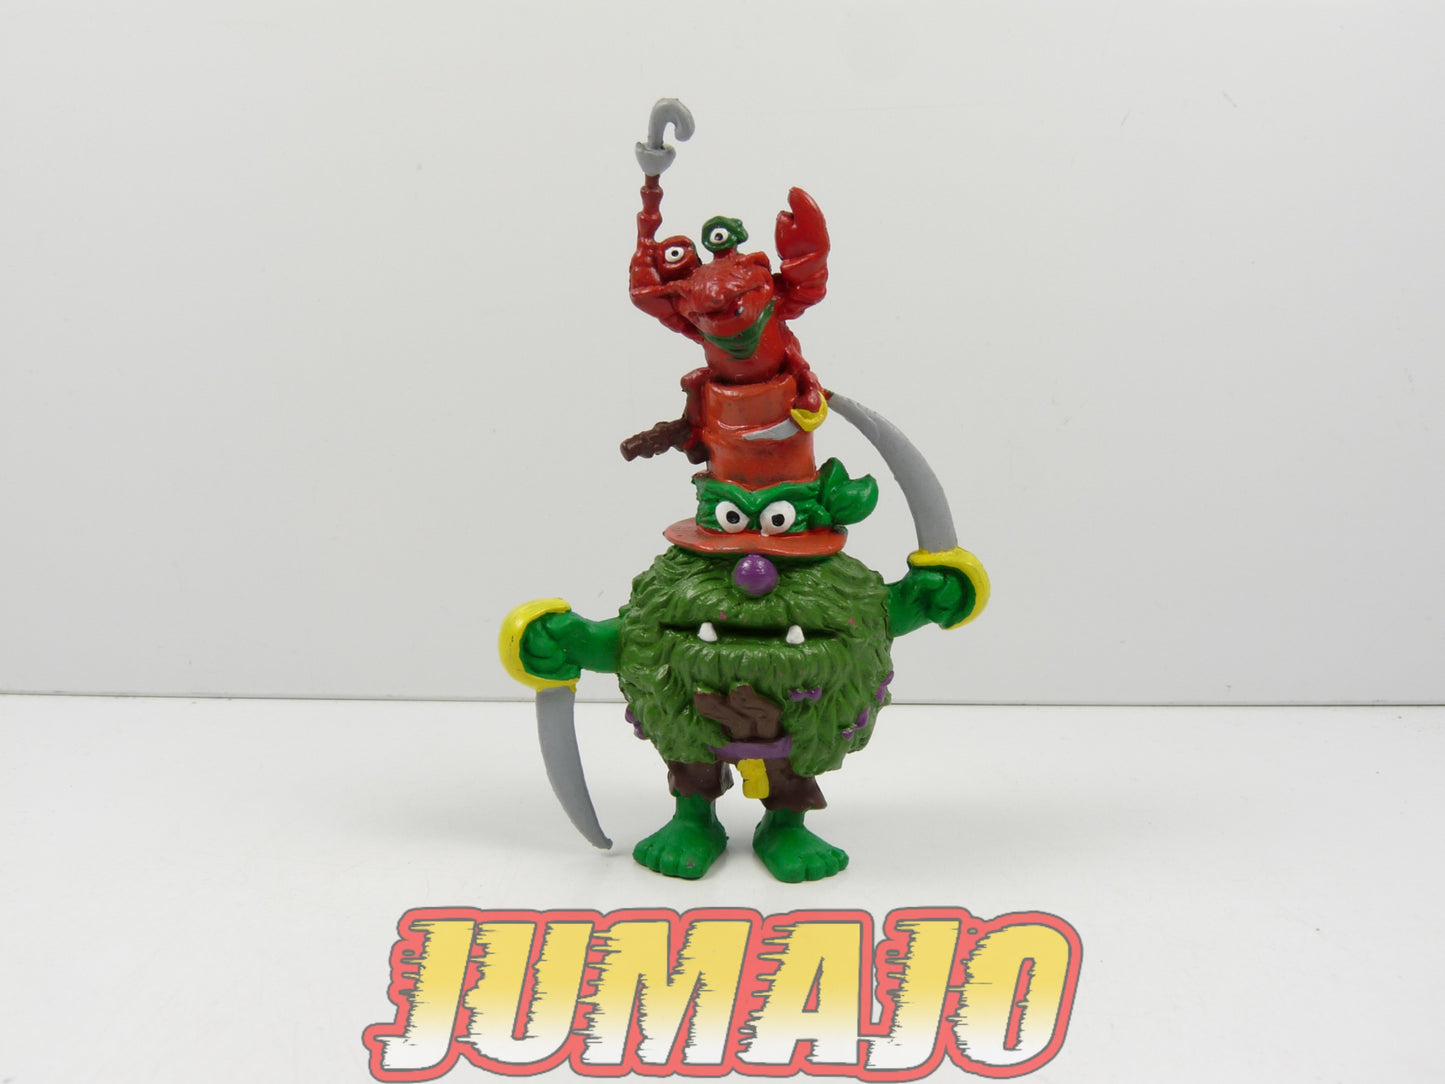 FIG154 : 7 figurines "Muppet Show" Treasure island MINILAND 9.5cm : Fozzie, Kermit & Gonzo